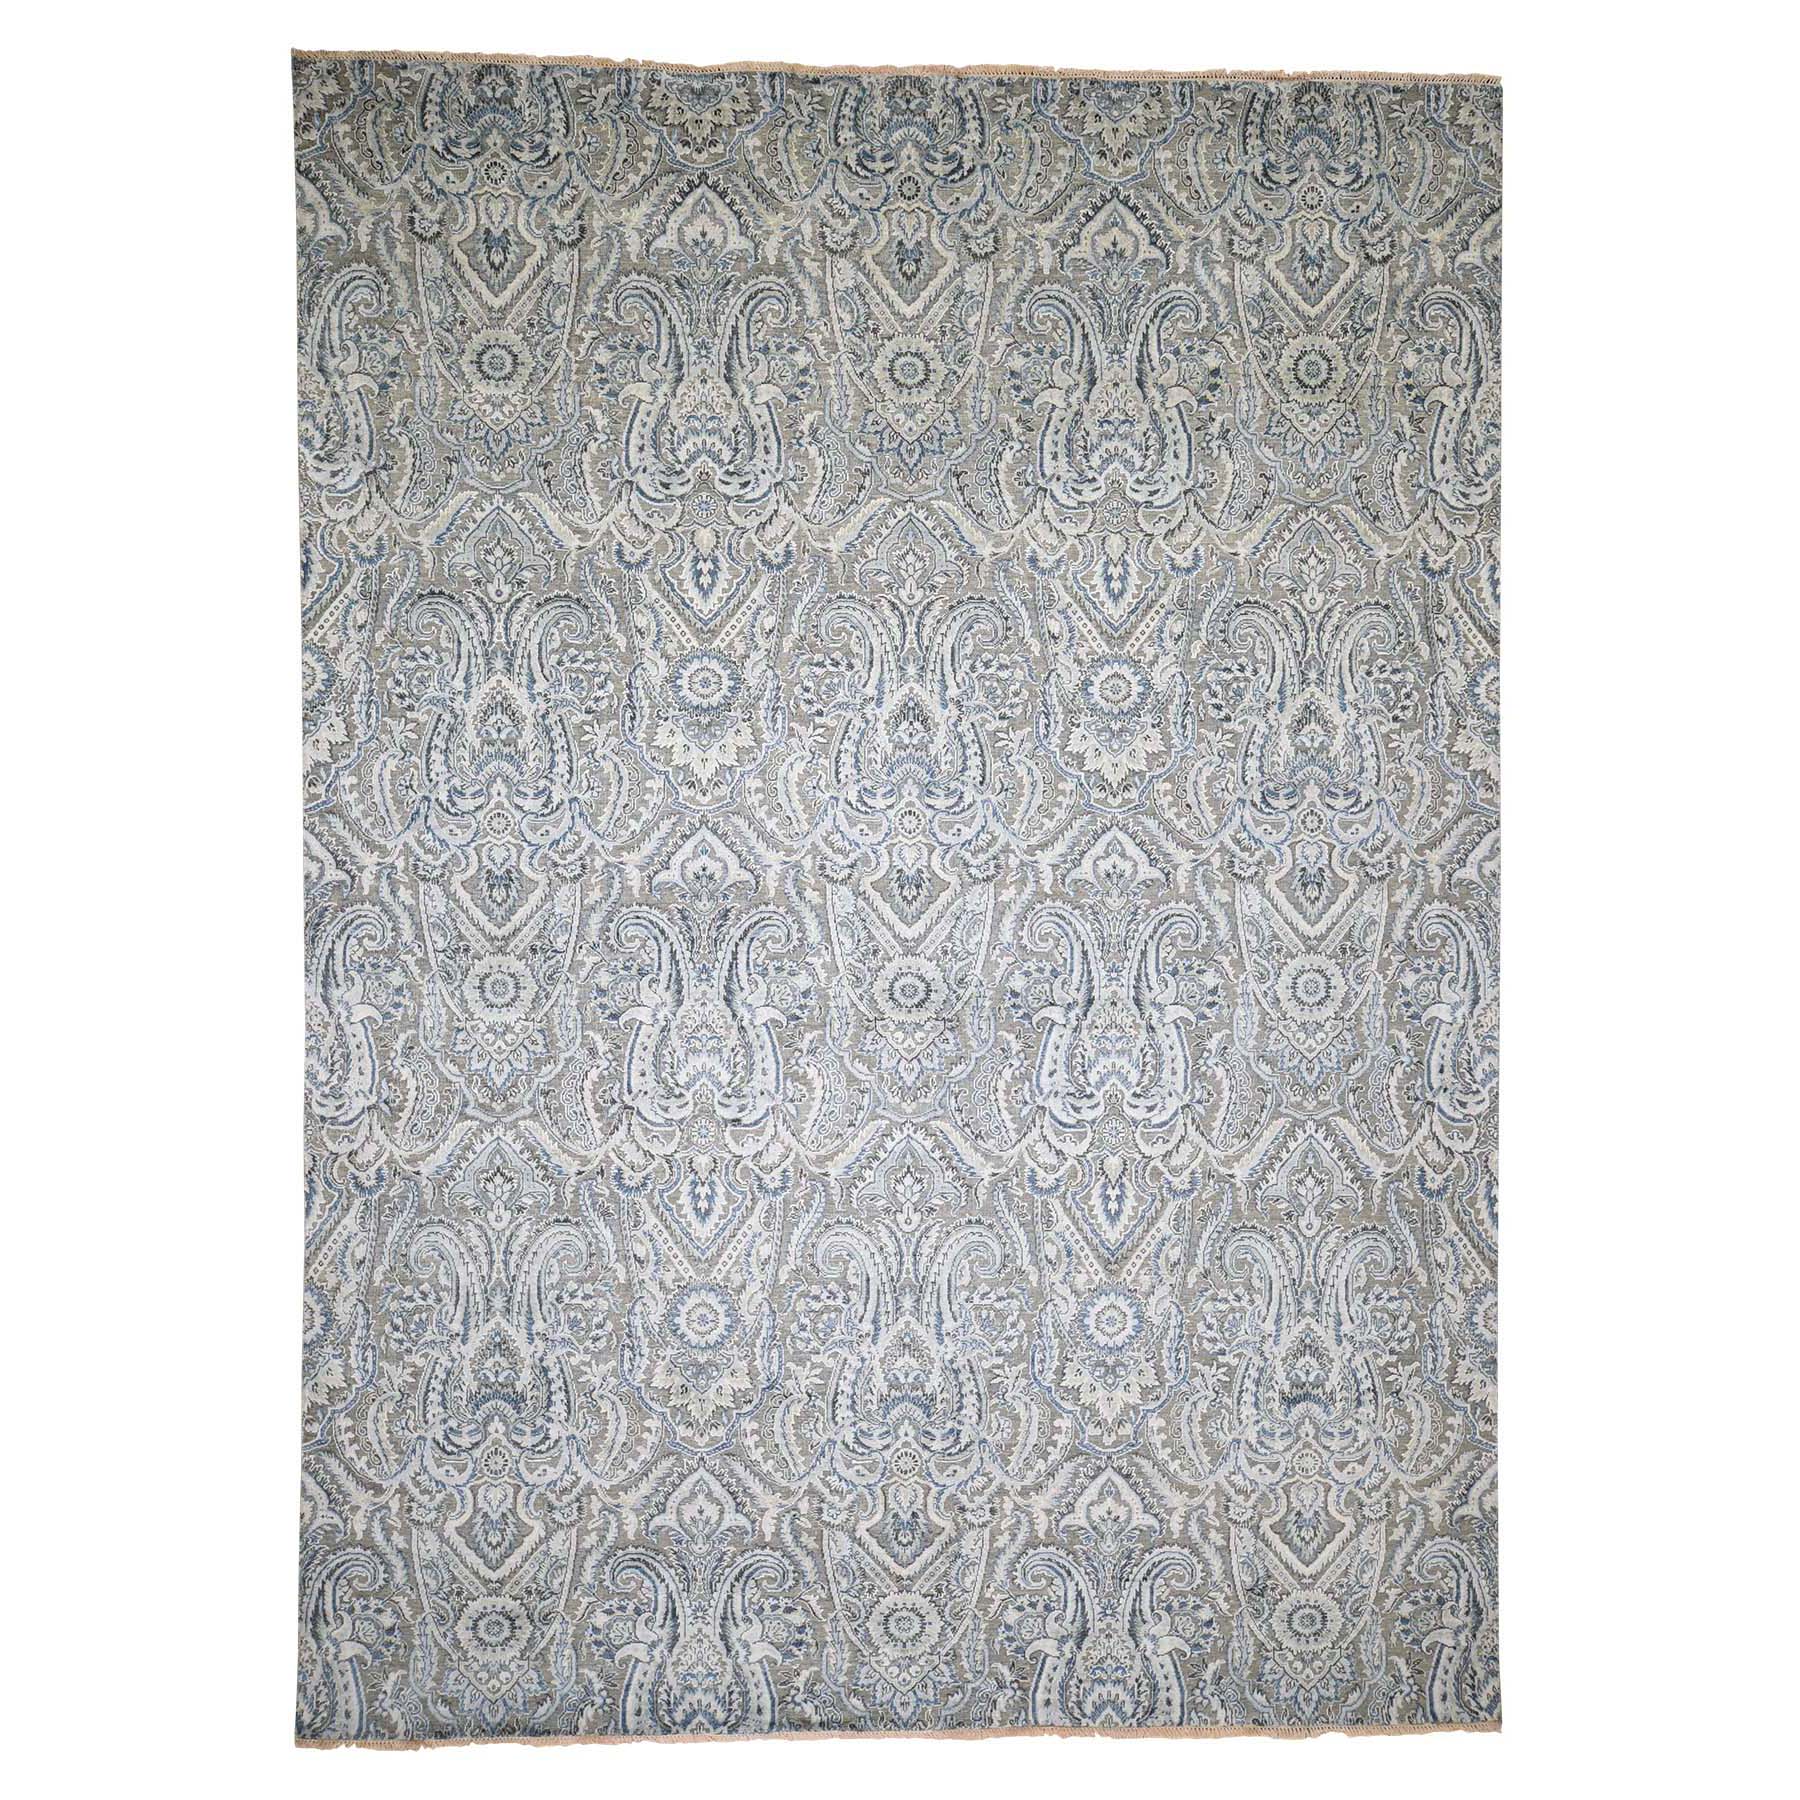 9'x12'1" Pure Silk Textured Wool Paisley Flower Design Hand Woven Rug 